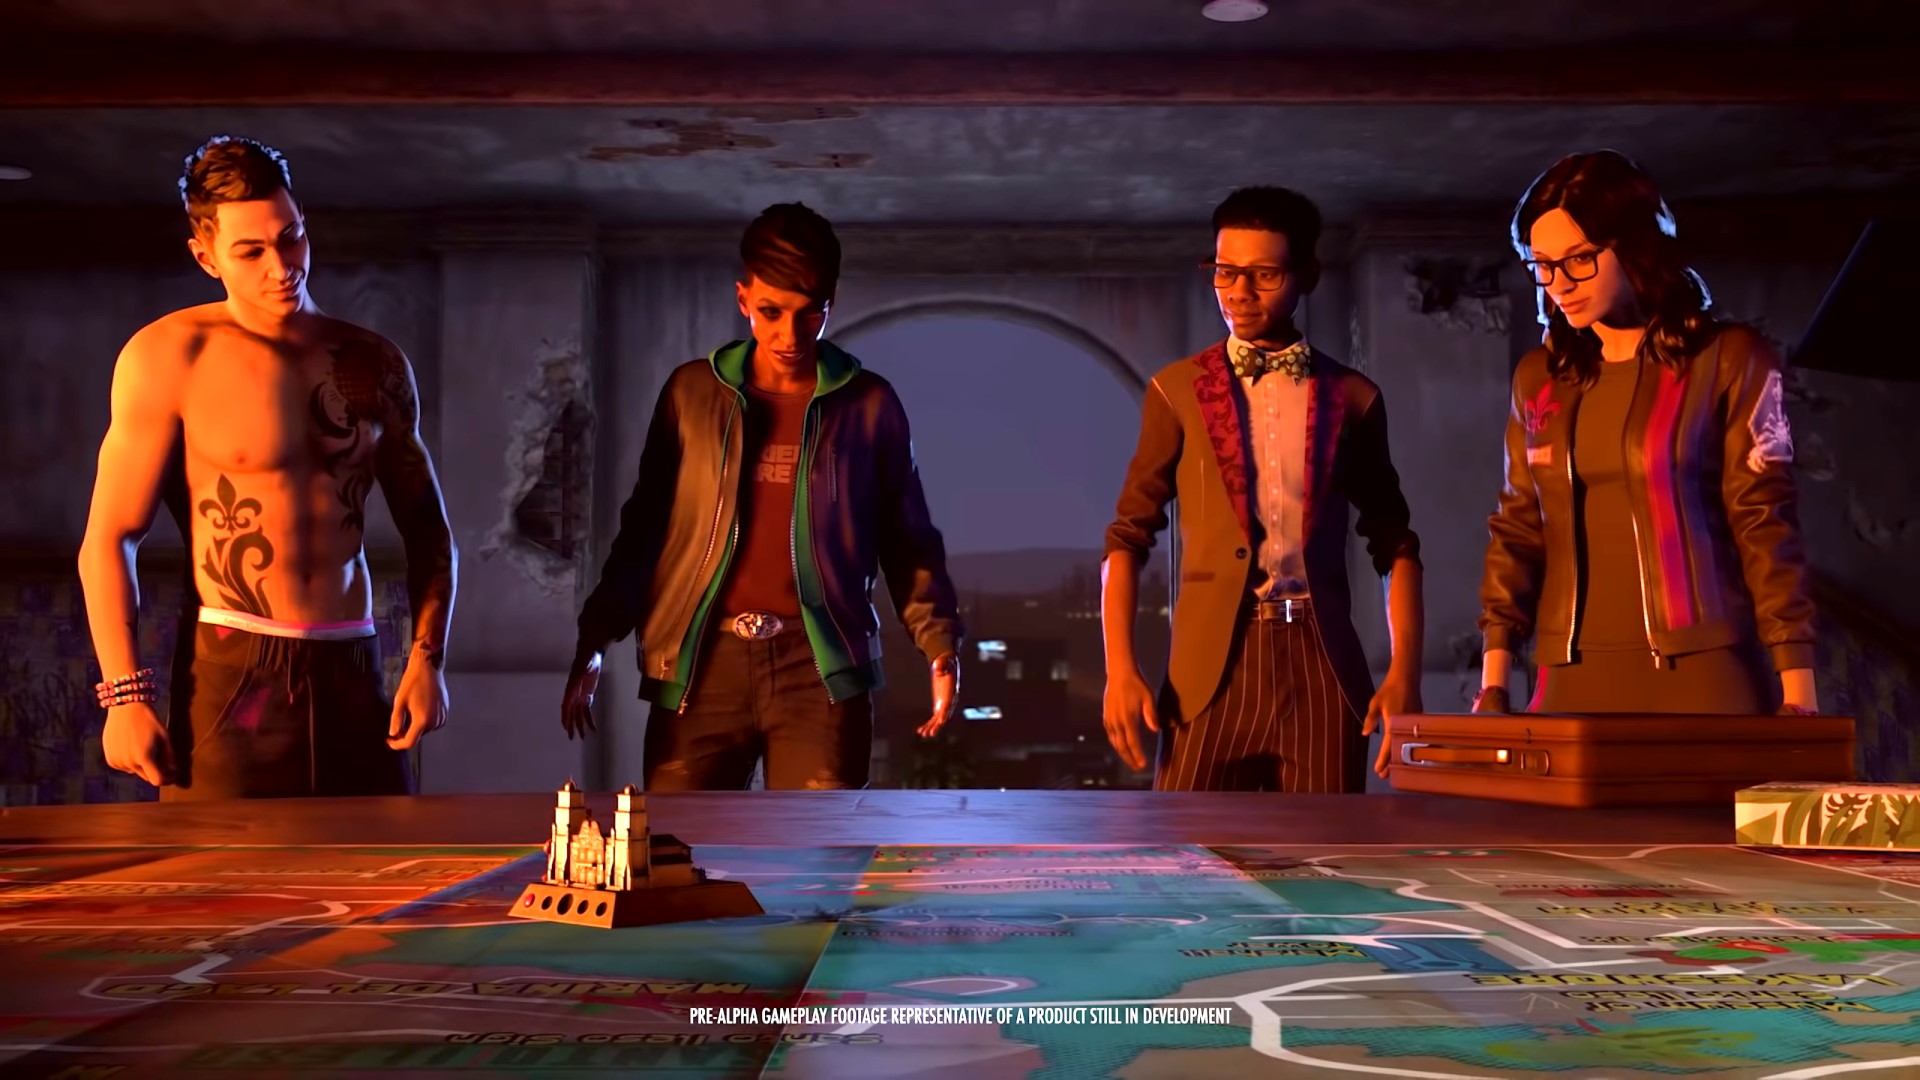 Saints Row gameplay video reveals new criminal ventures